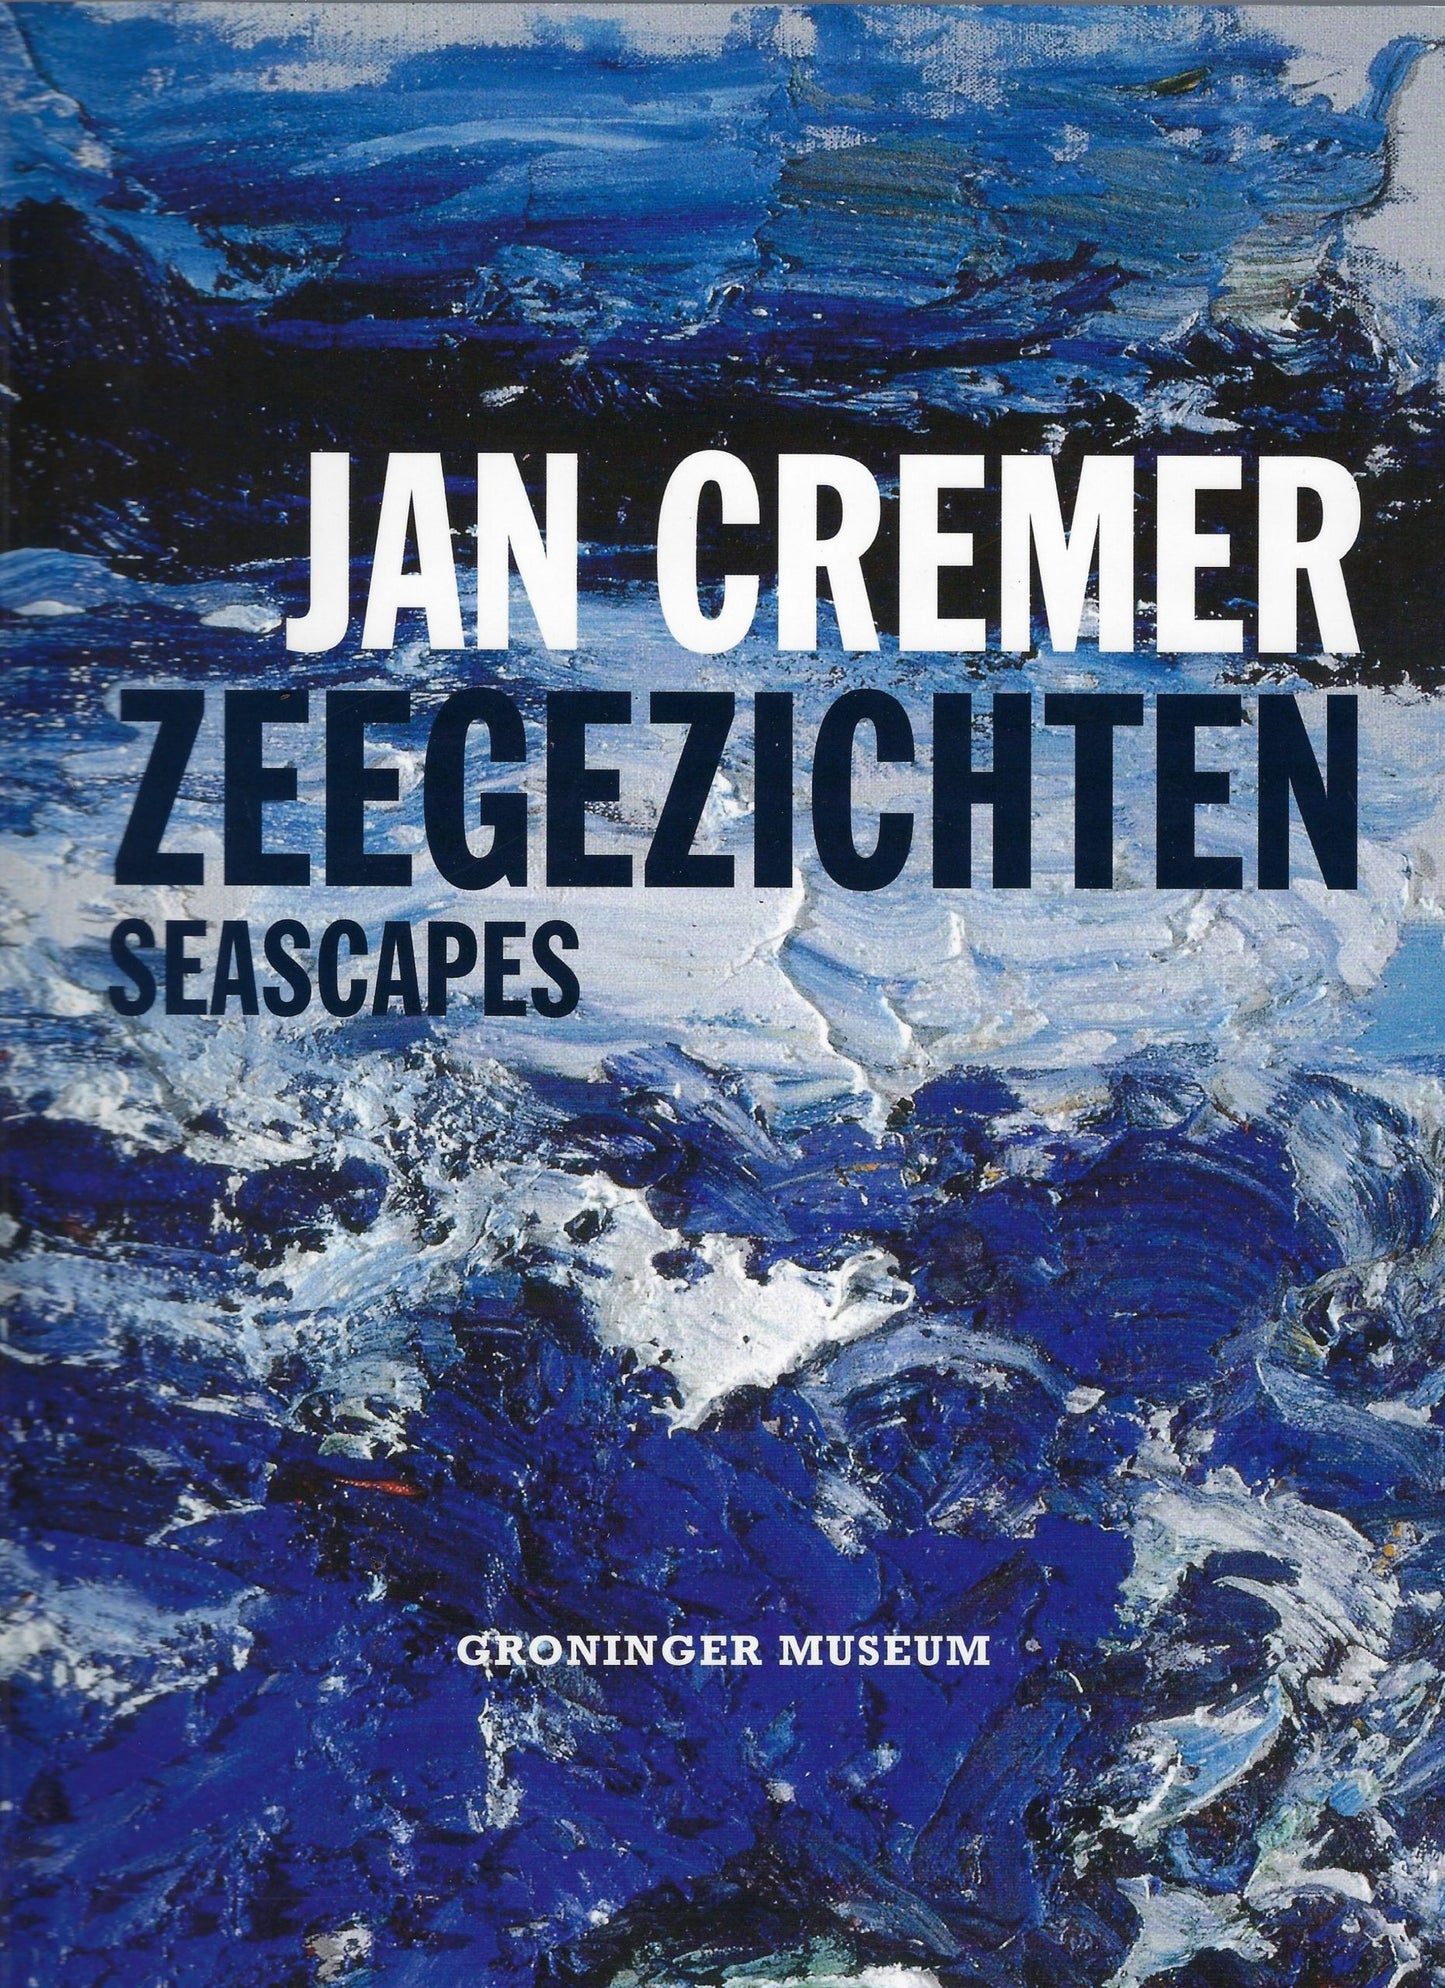 Jan Cremer, zeegezichten, seascapes